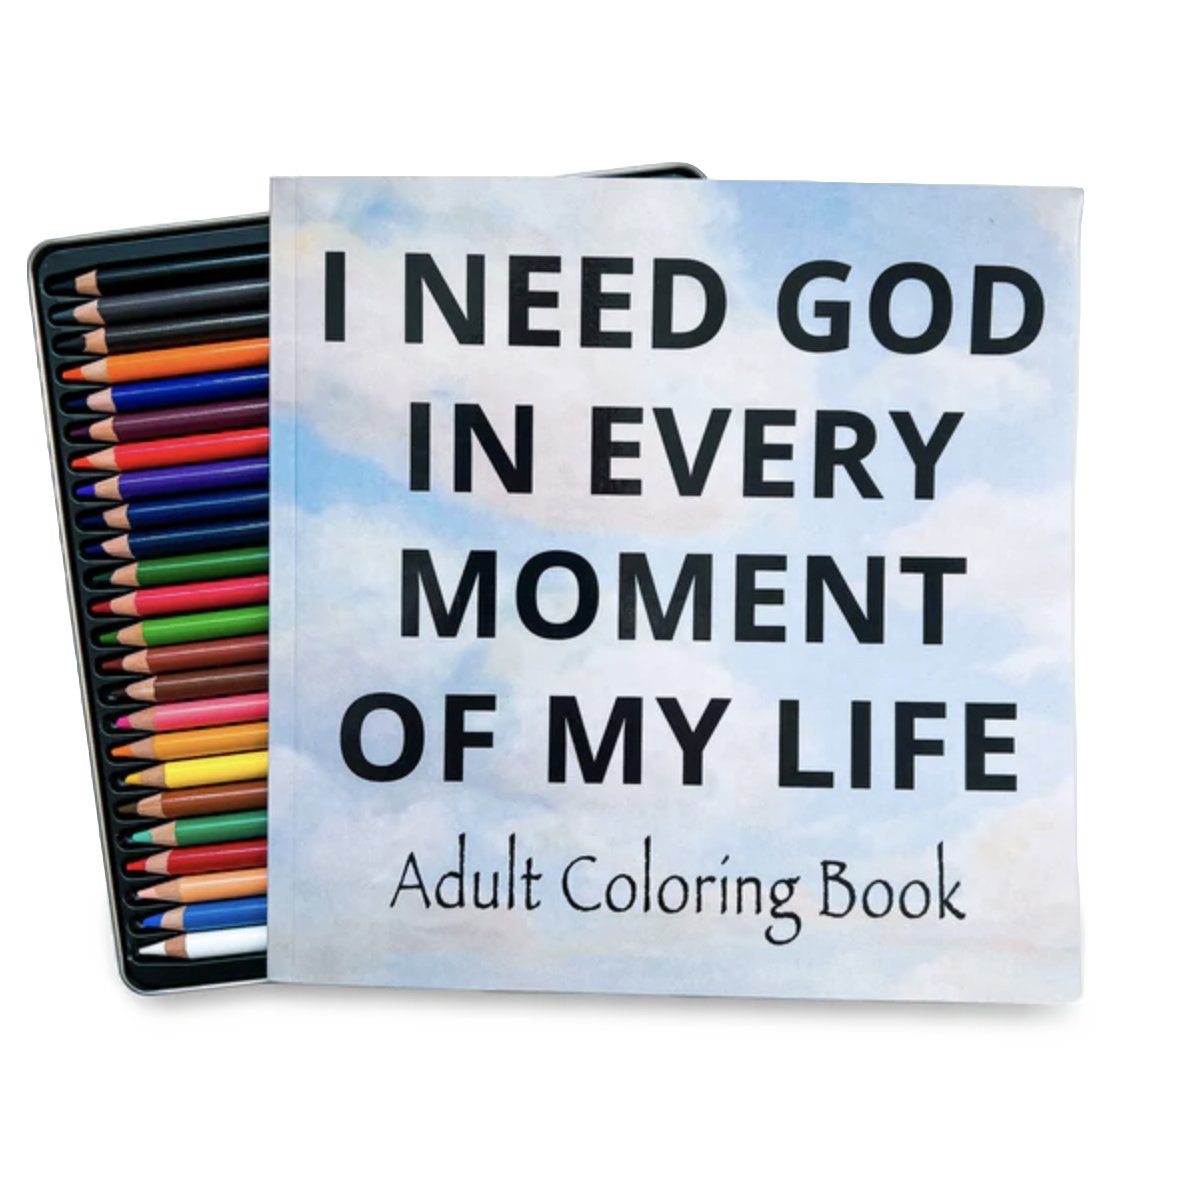 I NEED GOD ADULT COLORING BOOK - I NEED GOD